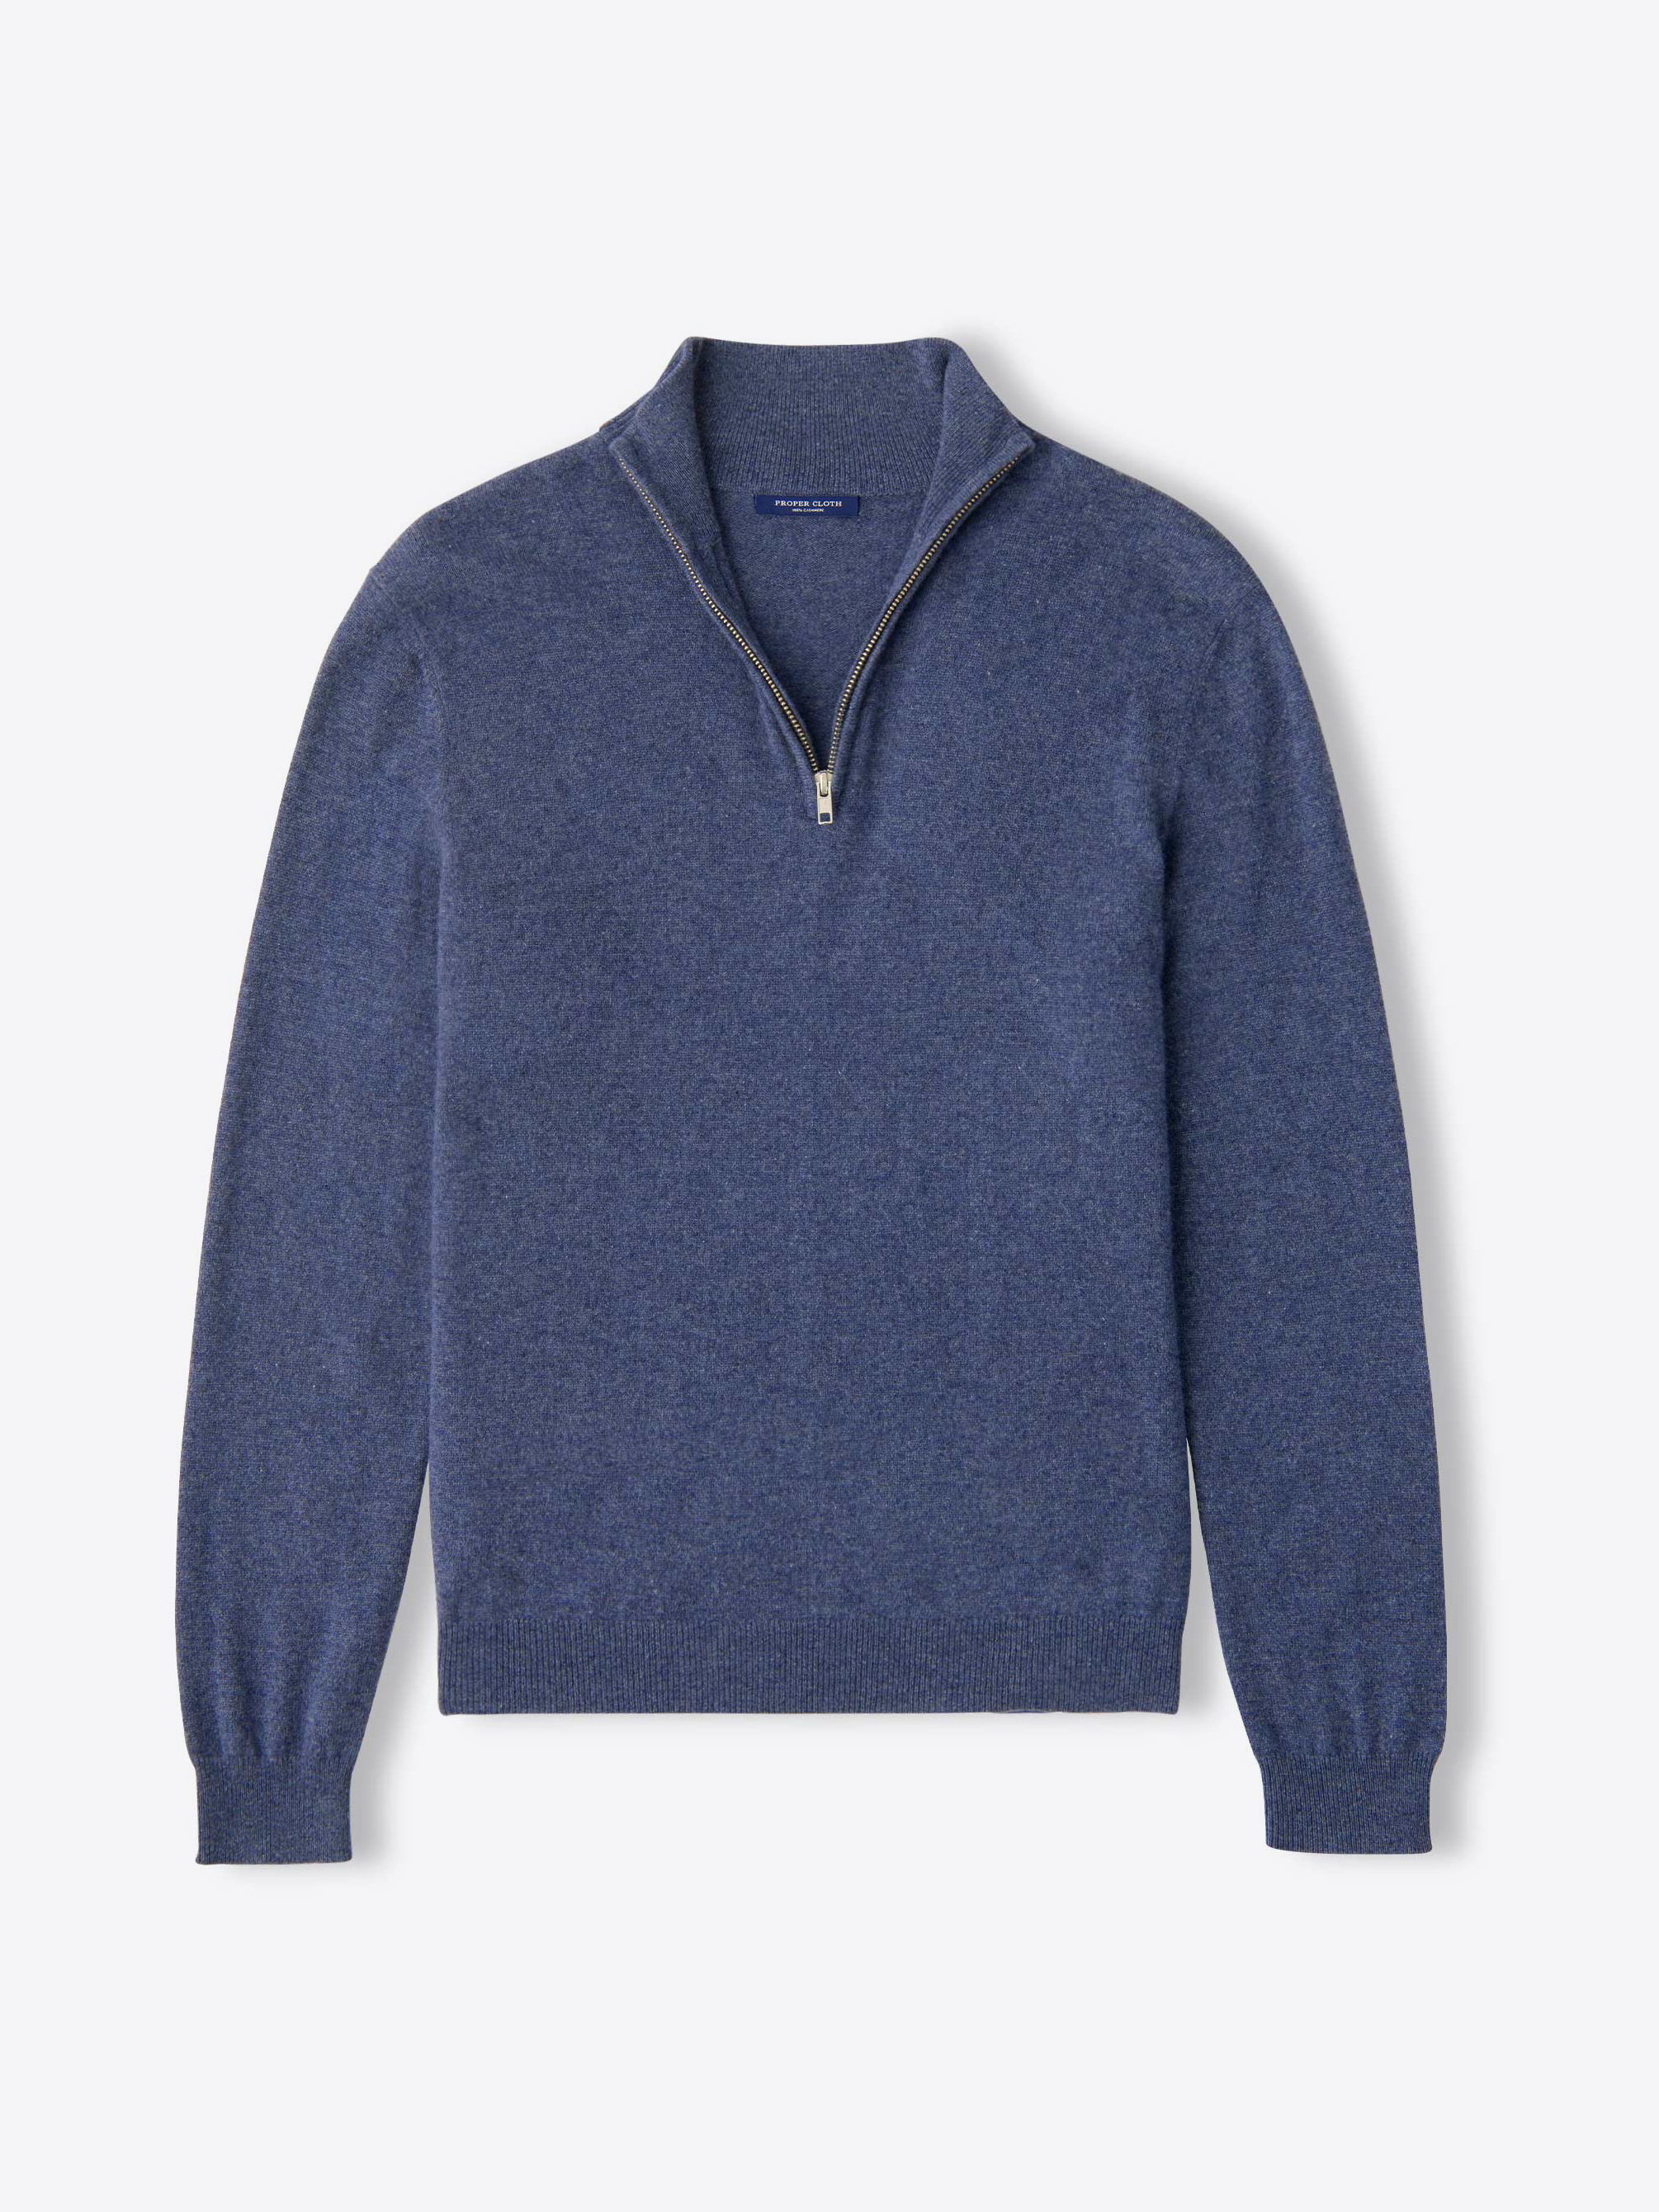 Zoom Image of Slate Cashmere Half-Zip Sweater